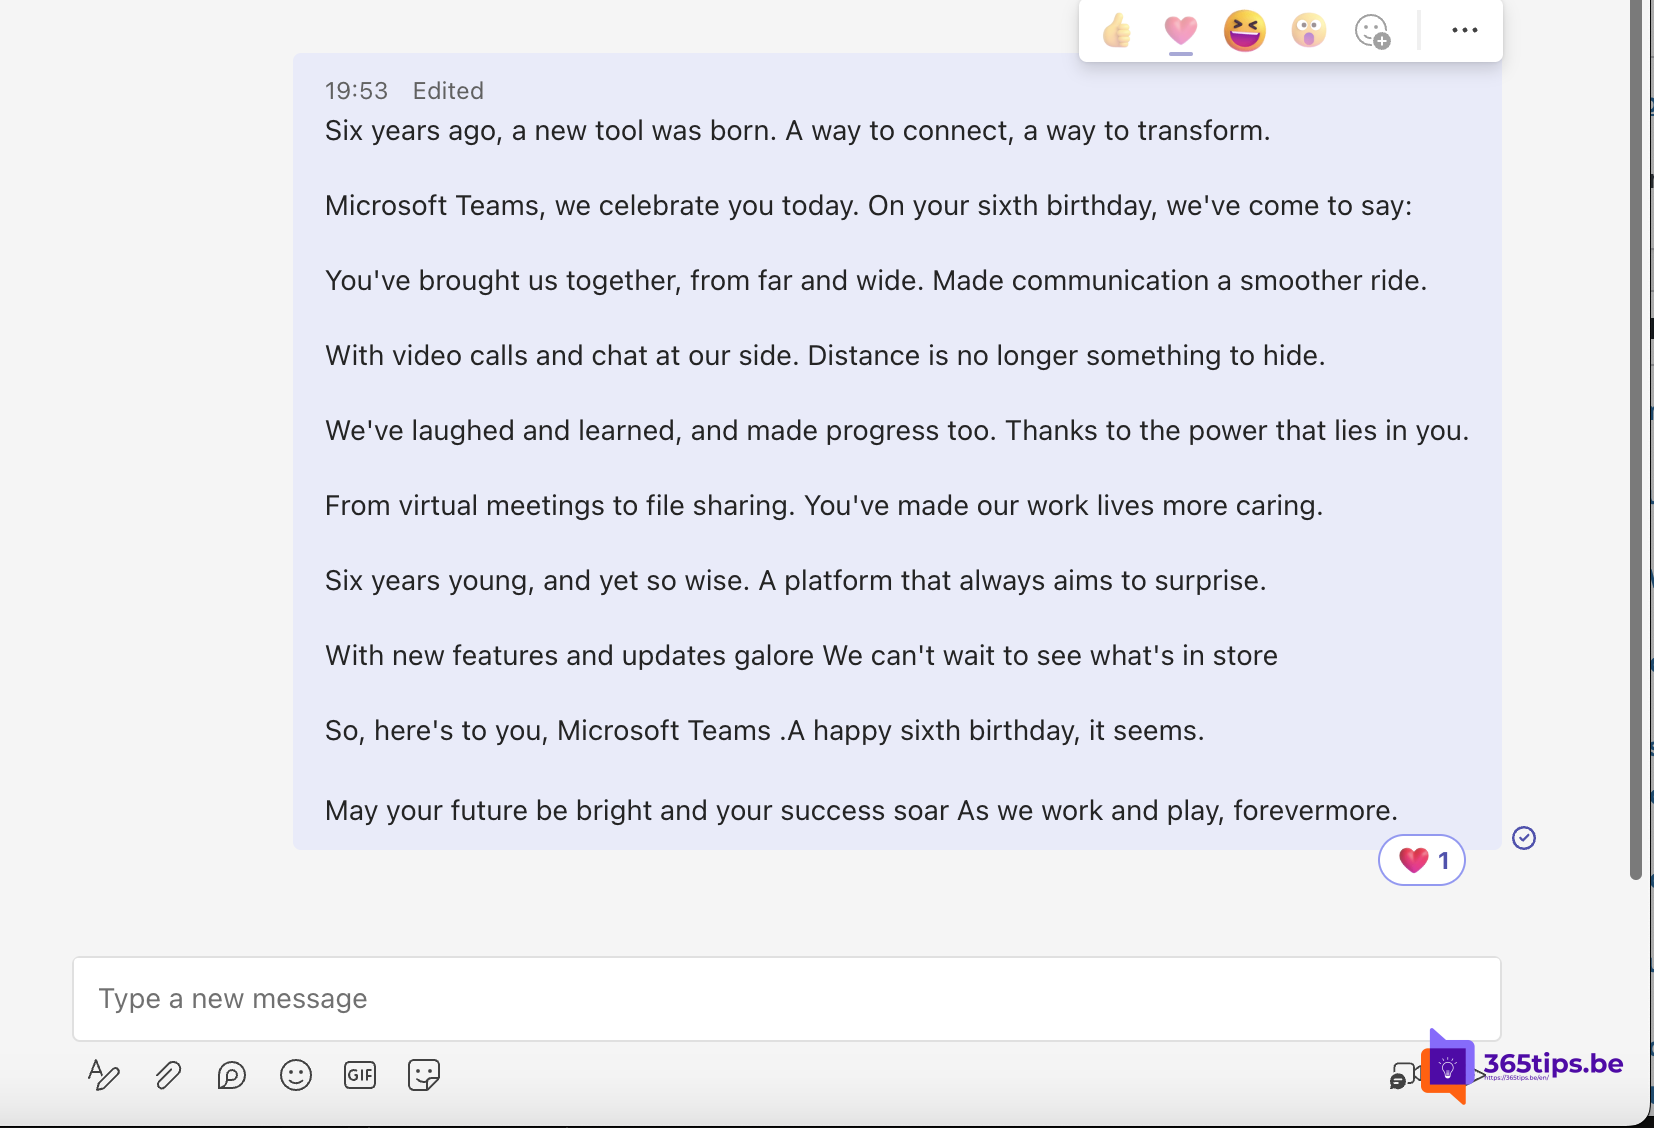 Joyeux 6e anniversaire, Microsoft Teams! 🎉 🎈